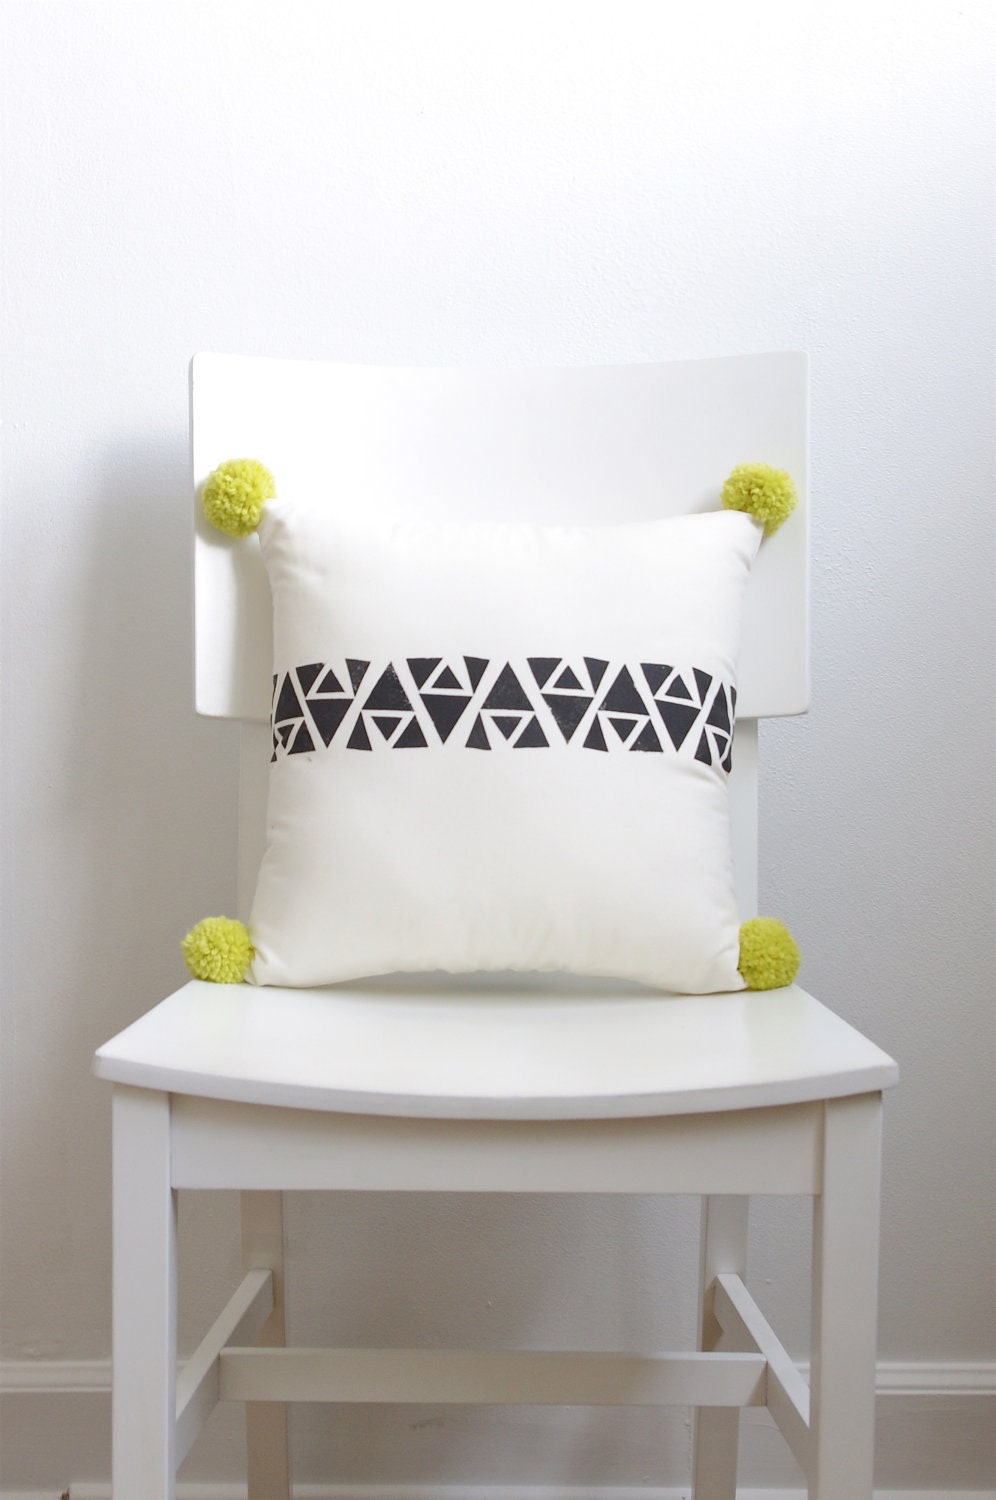 Hand Printed Geometric Pom Pom Decorative Pillow - The Frida Collection - Black, Cream and Bright Yellow